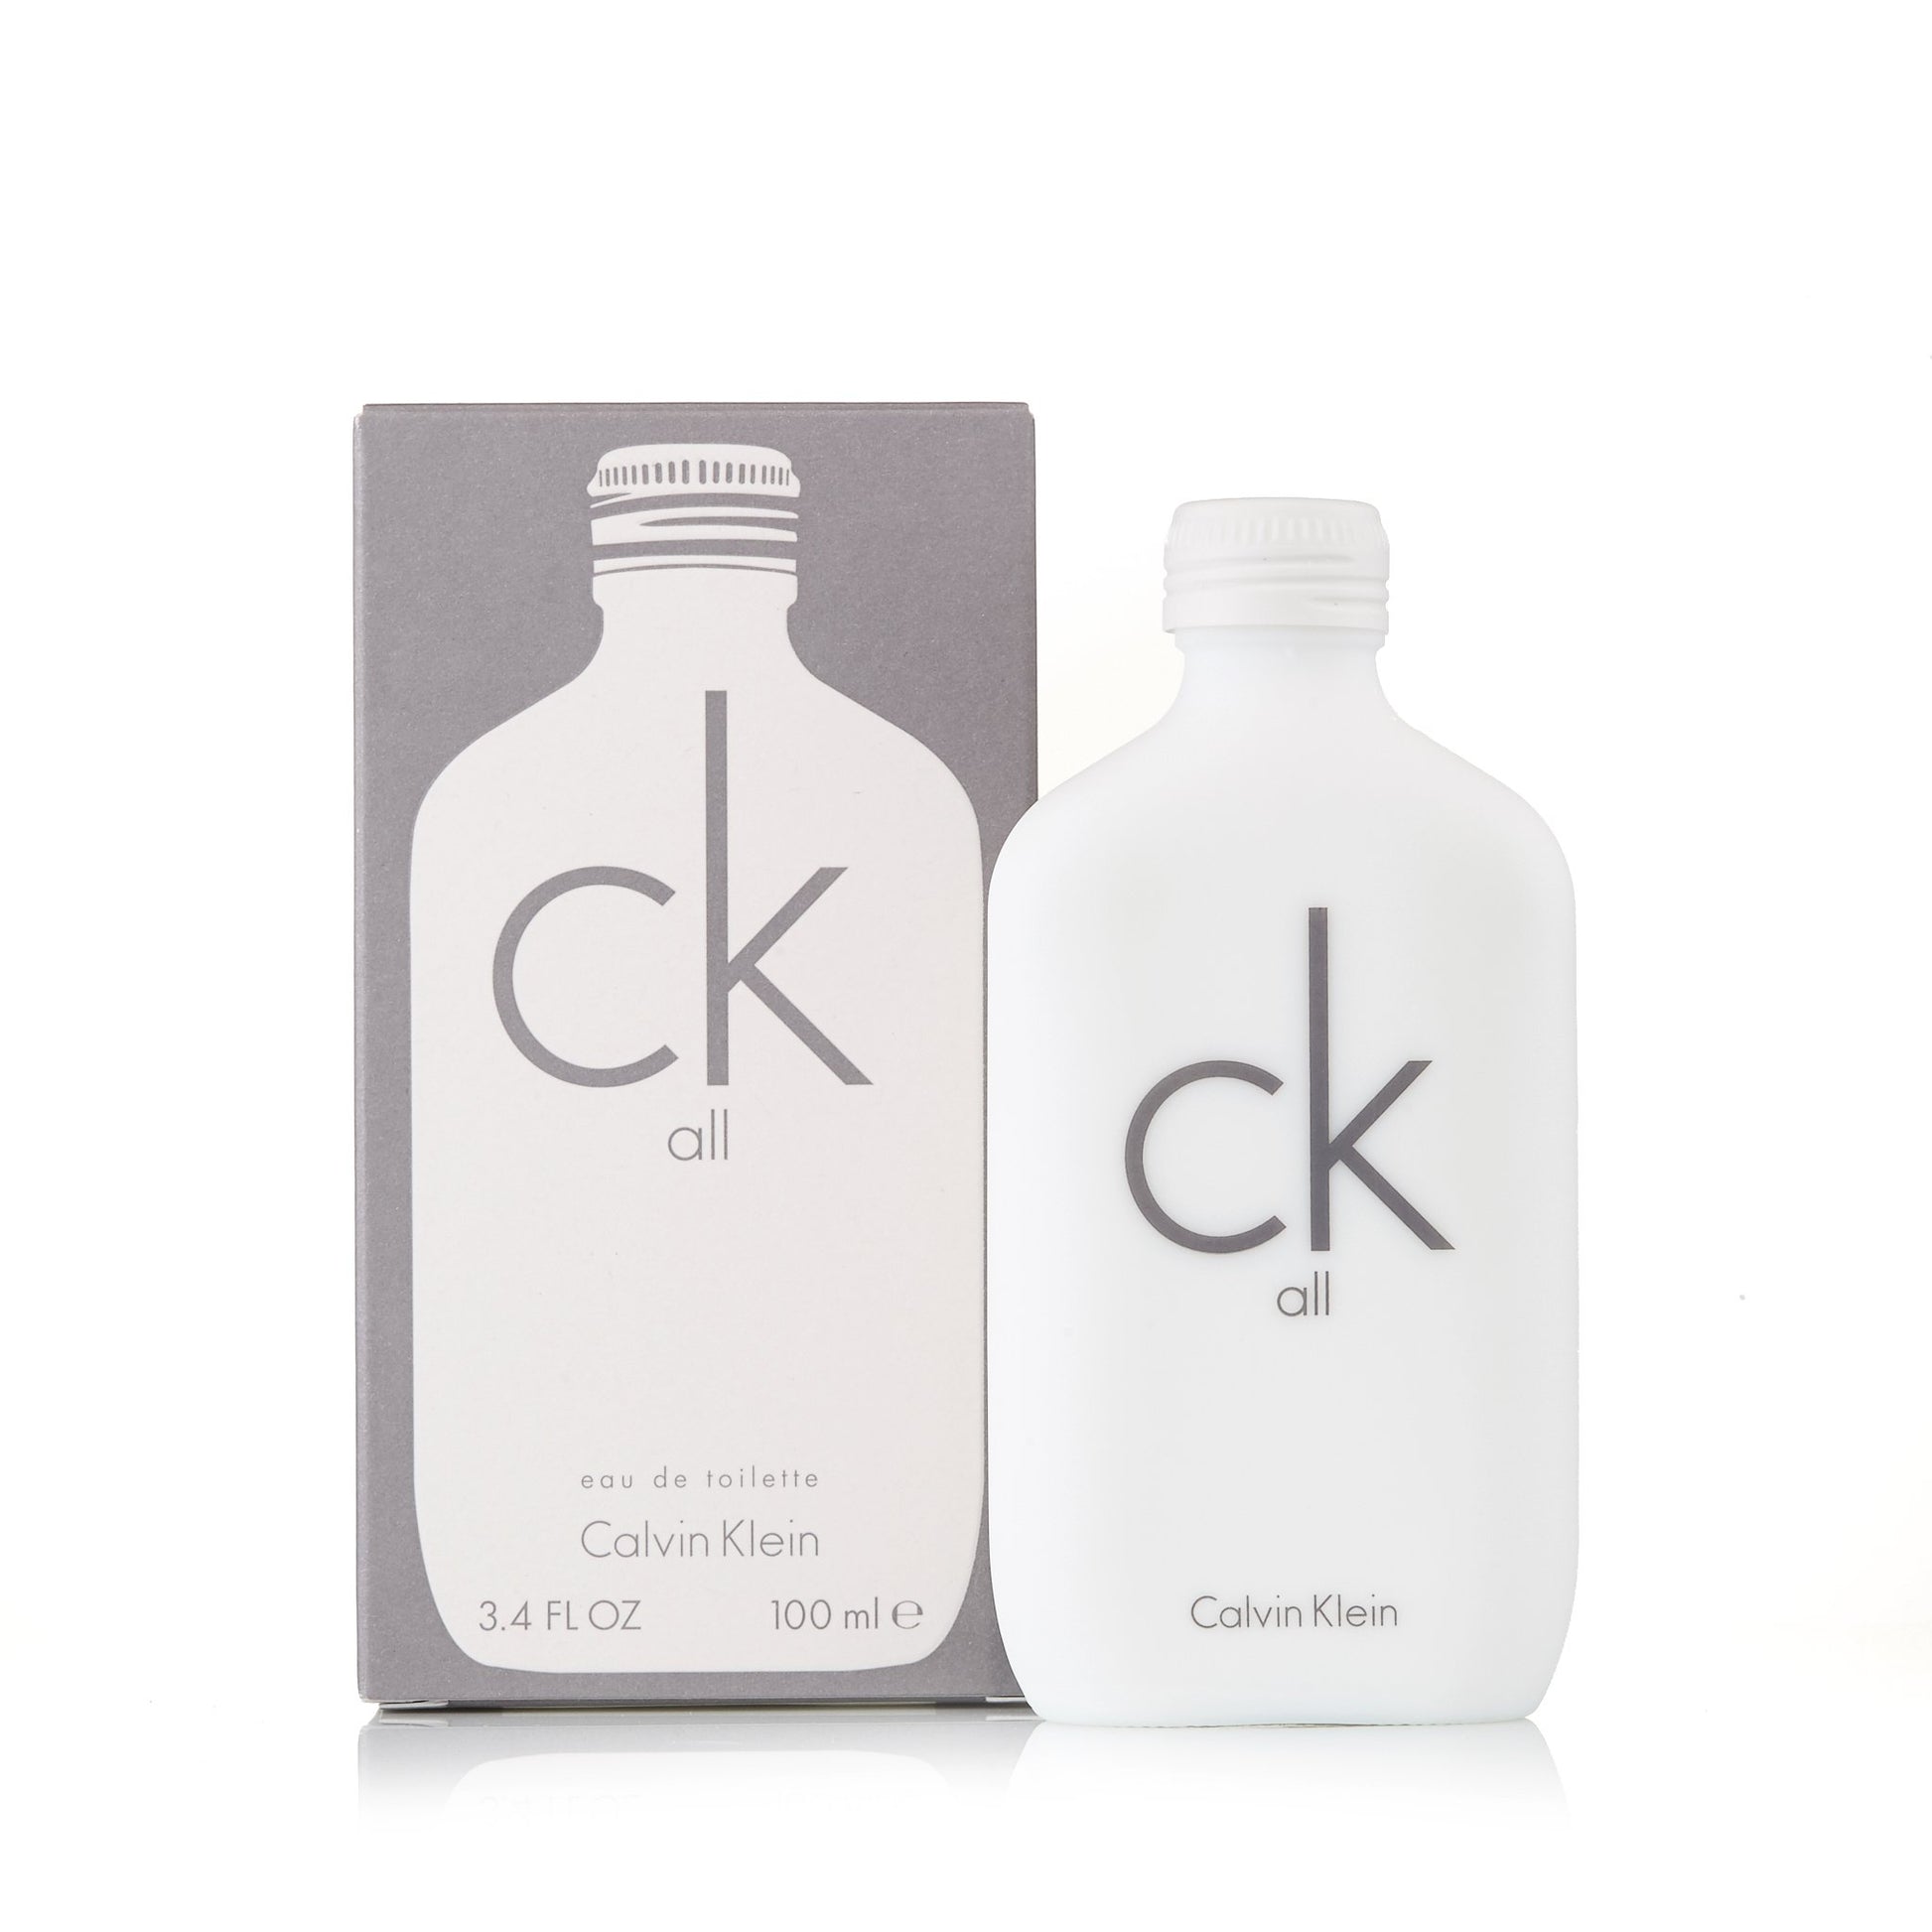 CK All Eau de Toilette Spray for Women and Men by Calvin Klein, Product image 2